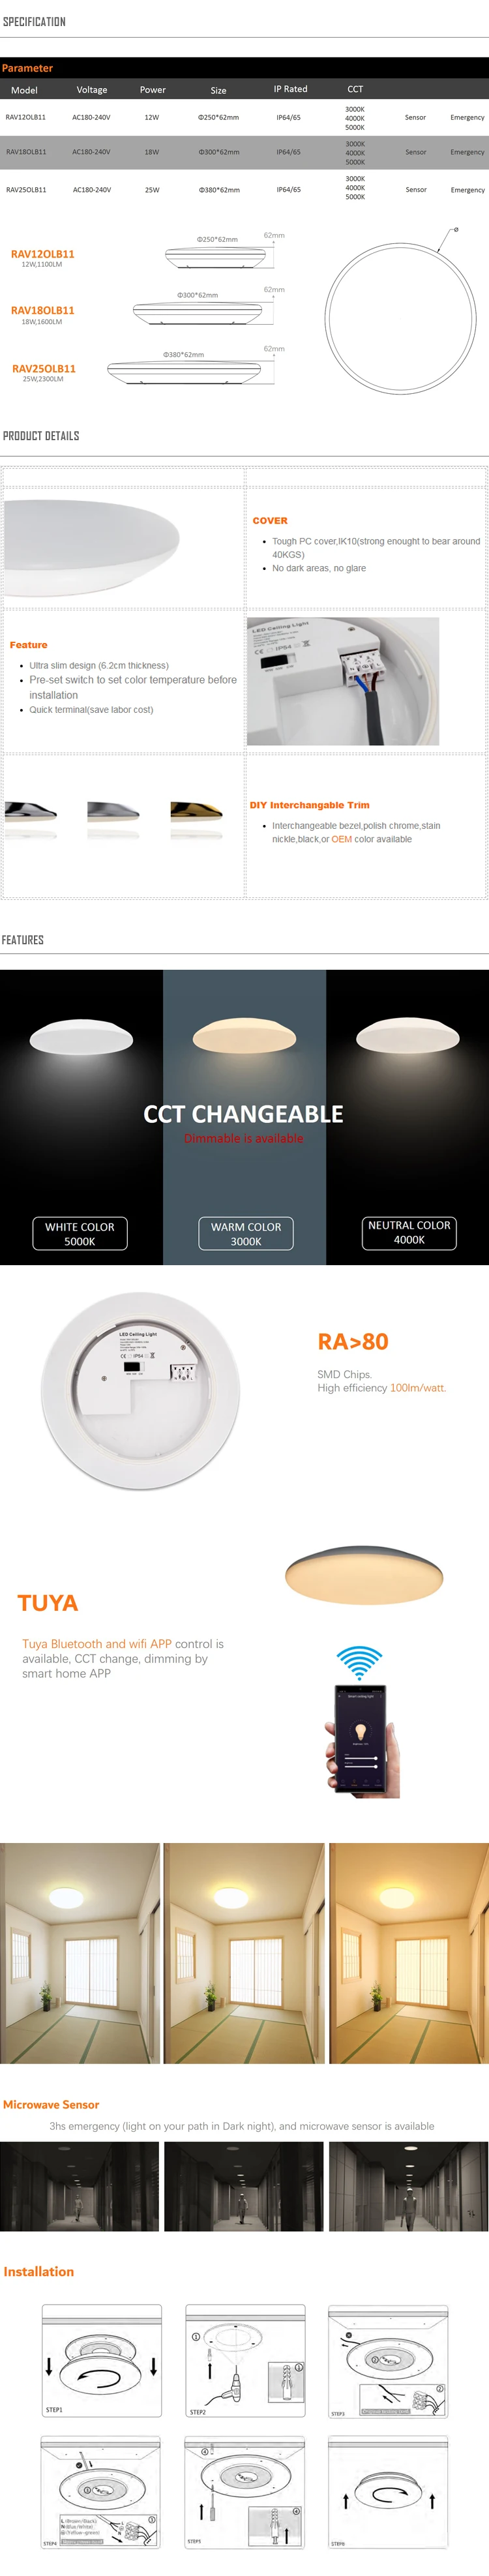 Sensor CCT Change ultra-thin emergency ceiling light modern industrial